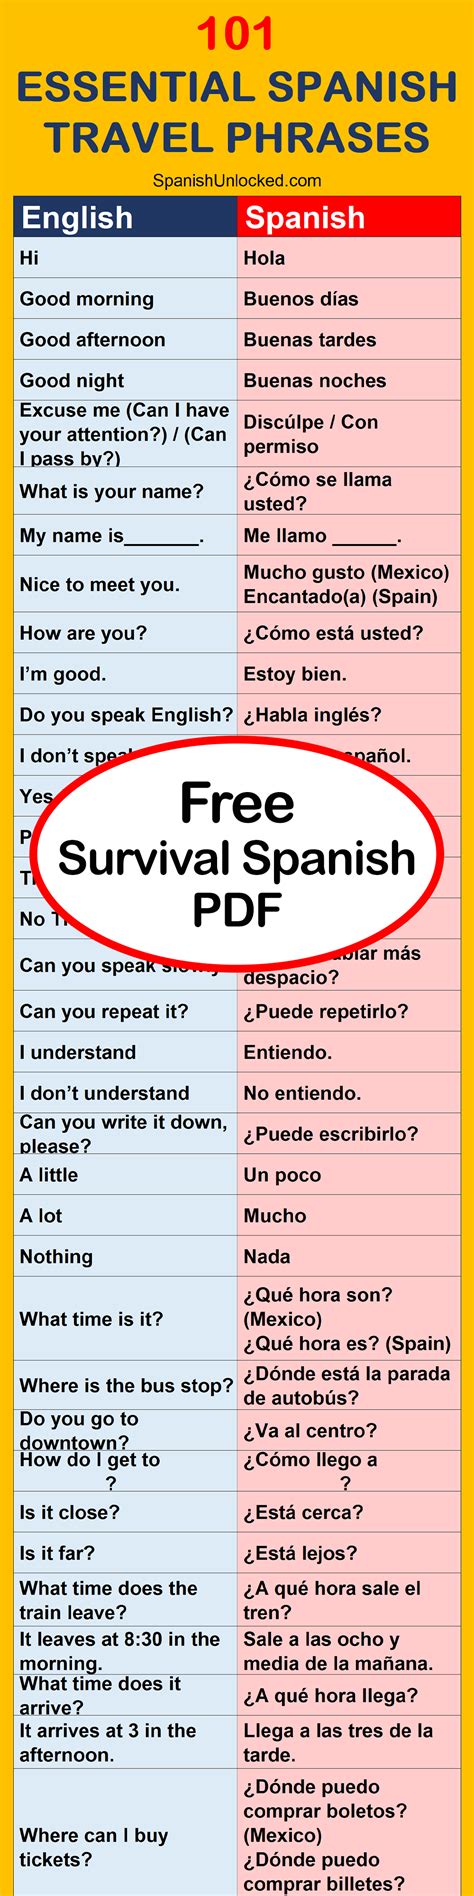 101 Essential Spanish Travel Phrases Free Survival Spanish Pdf